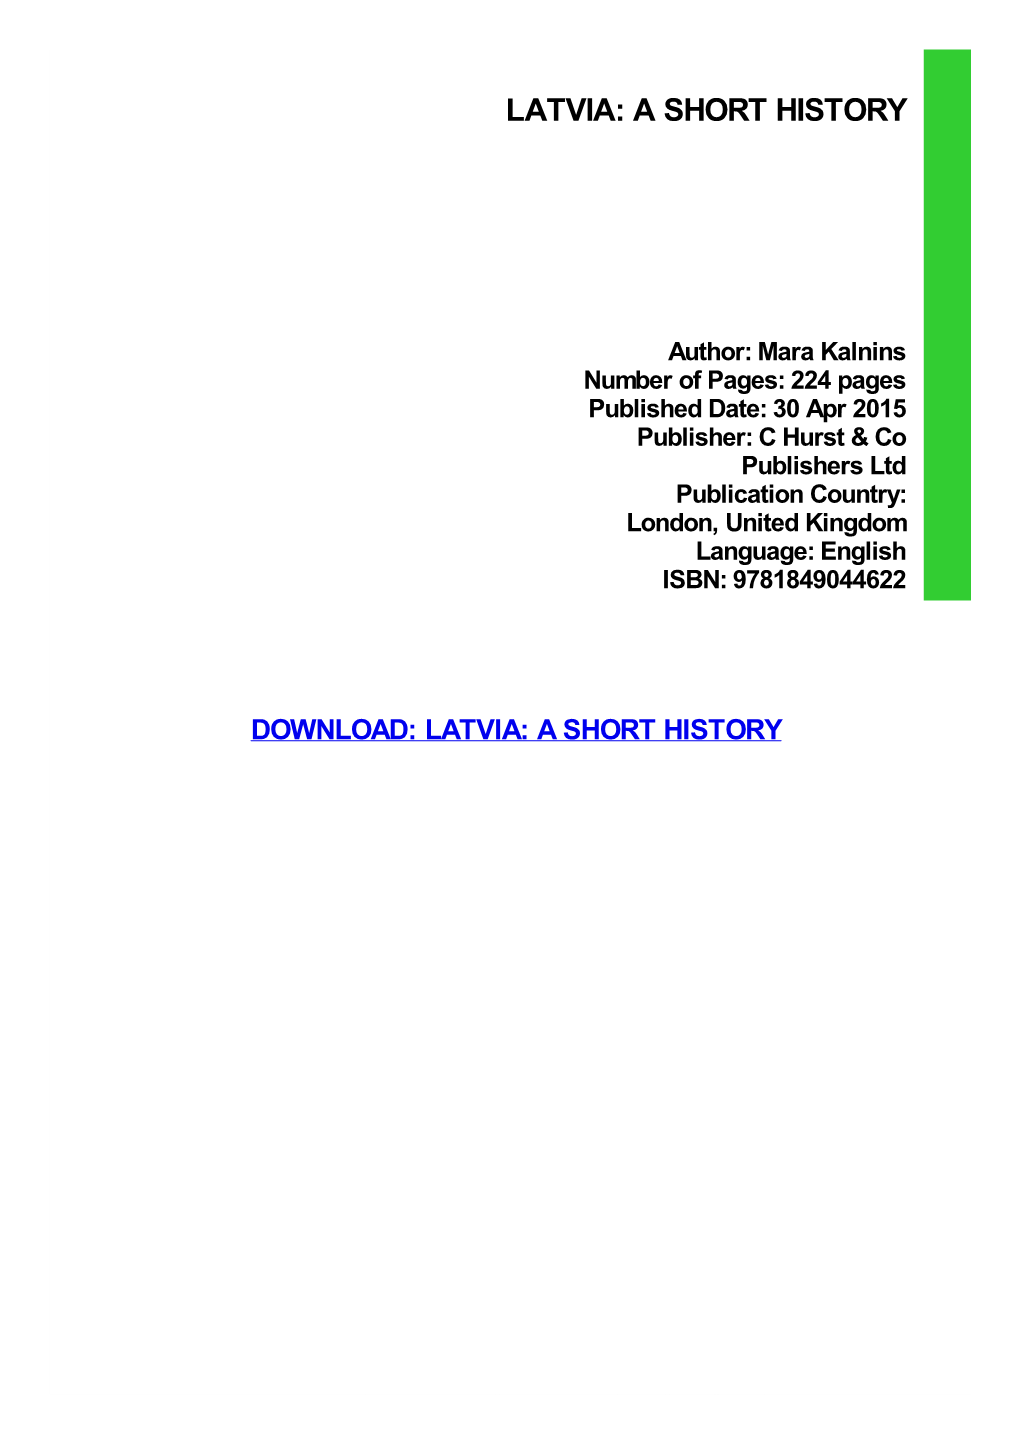 Latvia: a Short History Download Free